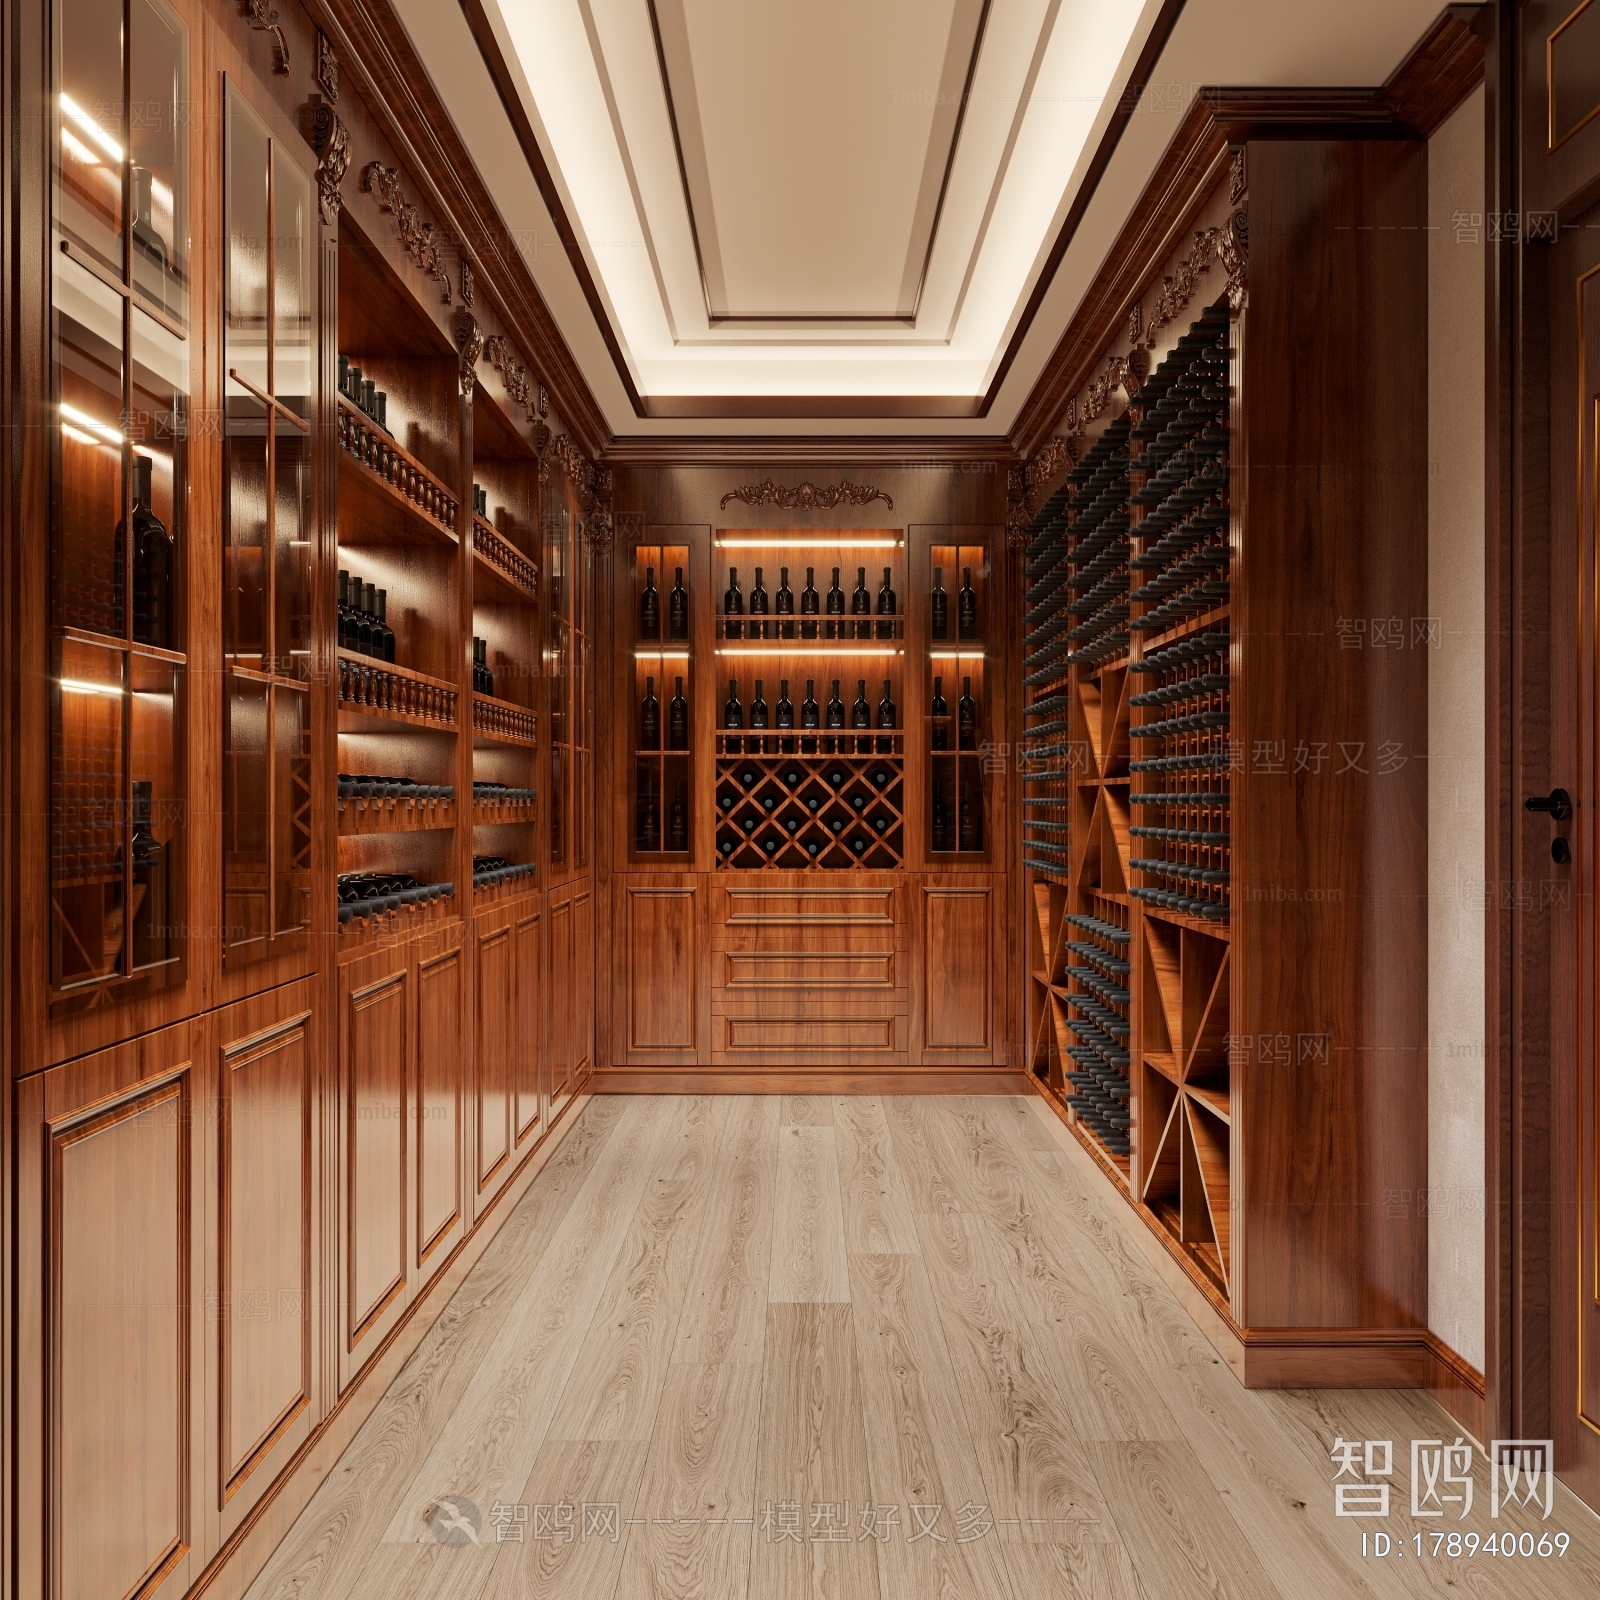 Chinese Style Wine Cellar/Wine Tasting Room